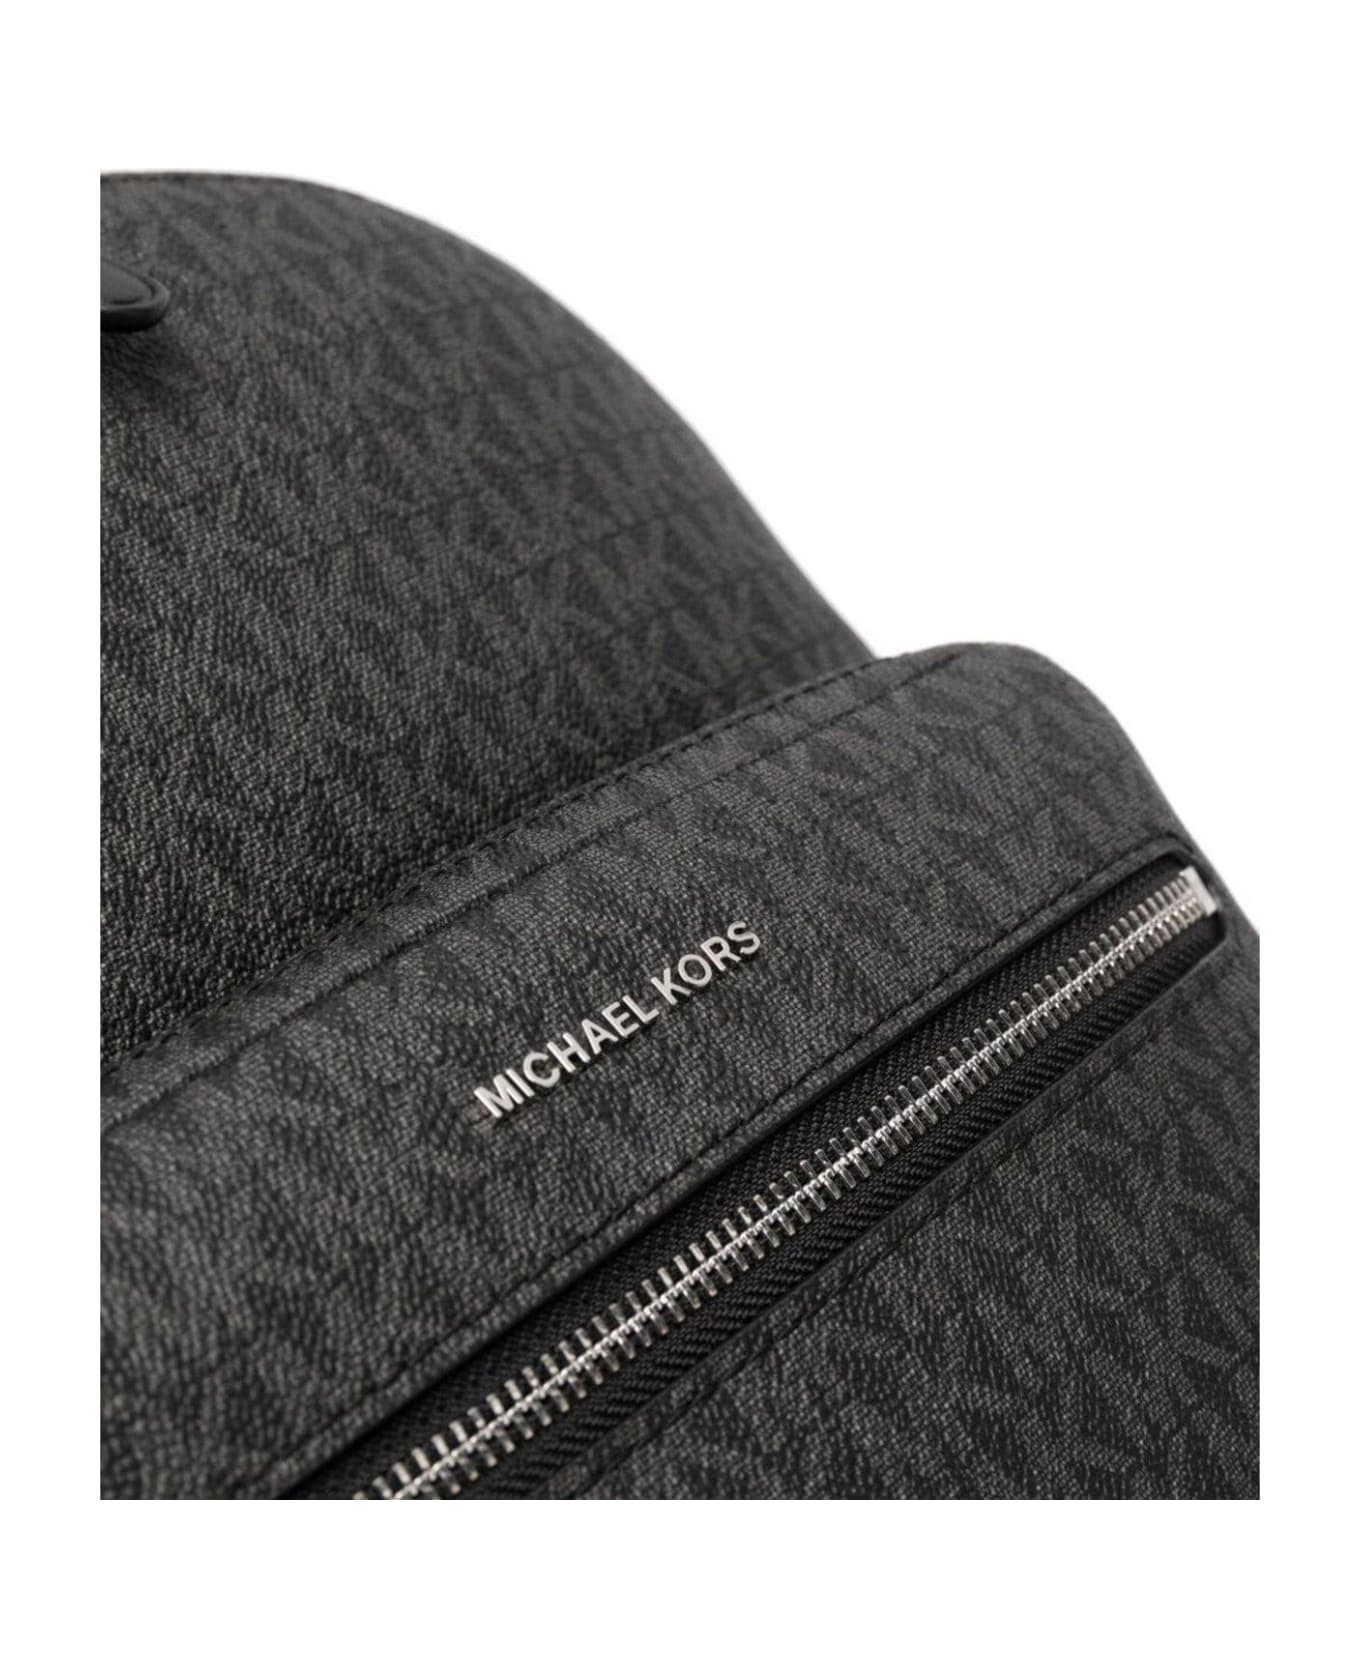 Michael Kors Hudson Logo Plaque Backpack - Black